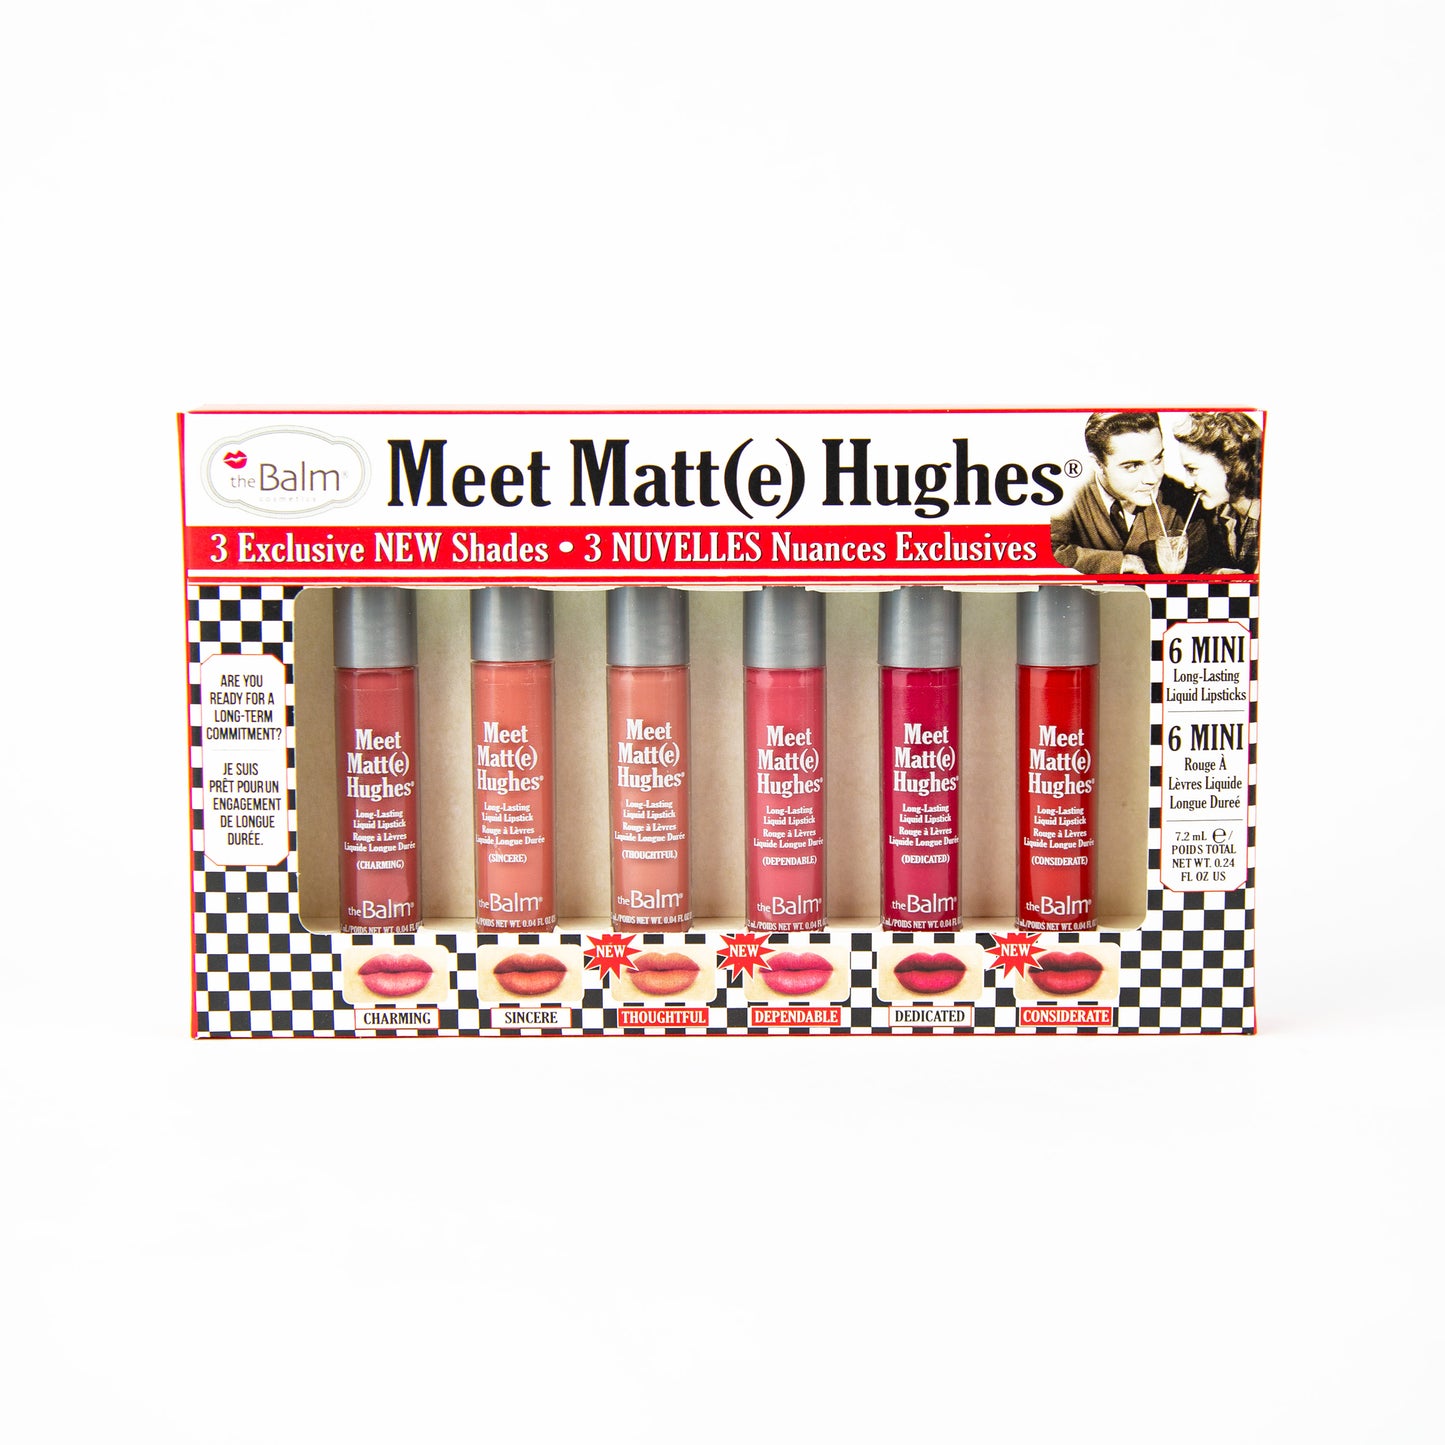 theBalm Meet Matt(e) Hughes Volume 14 Set of 6 Mini Long-Lasting Liquid Lipsticks with 3 New Shades